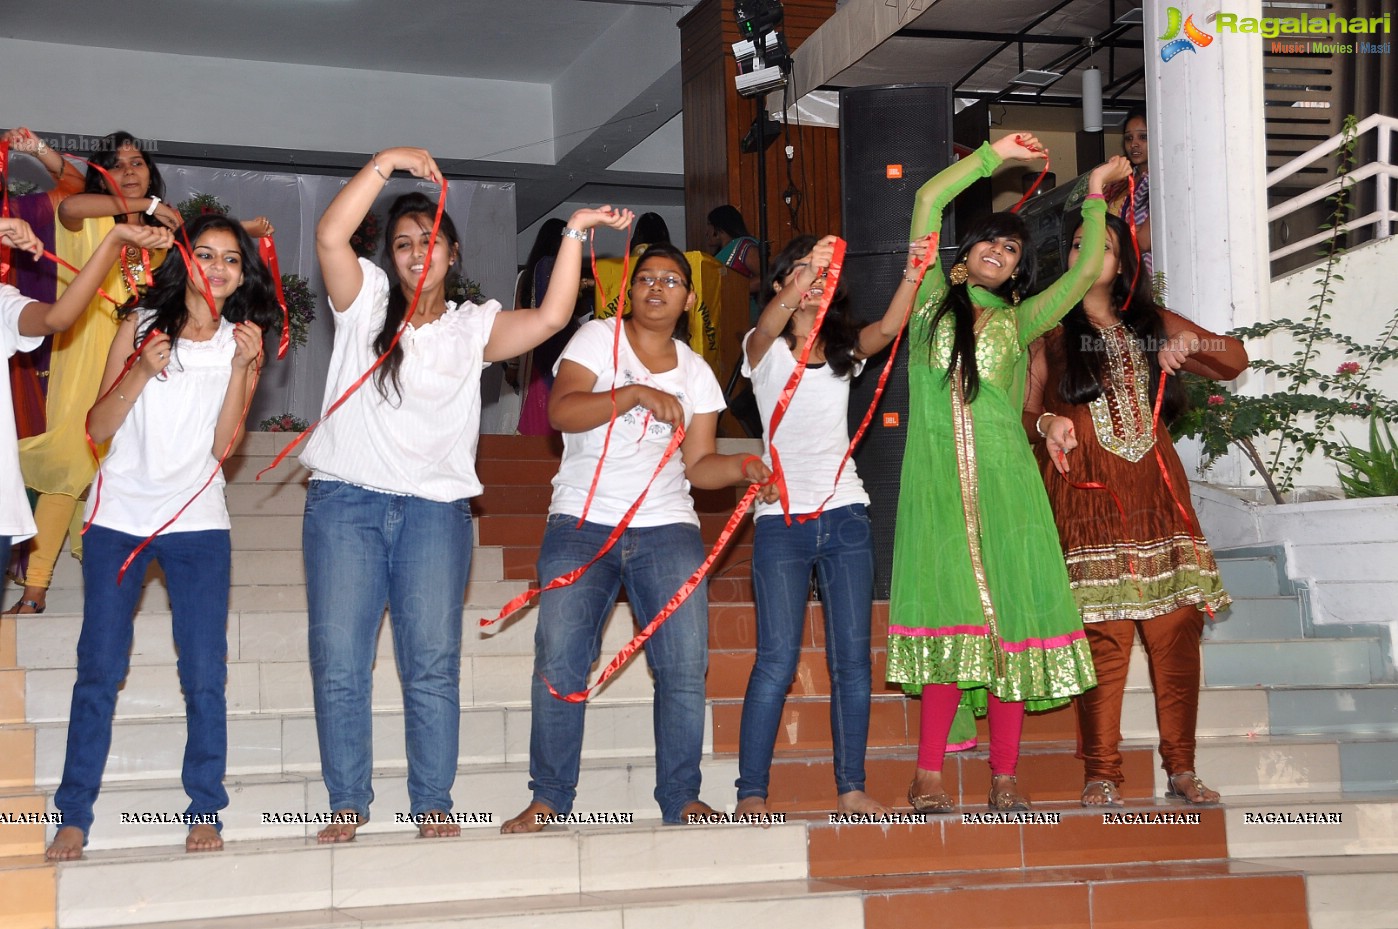 Villa Marie Alvida 2013 Celebrations, Hyderabad